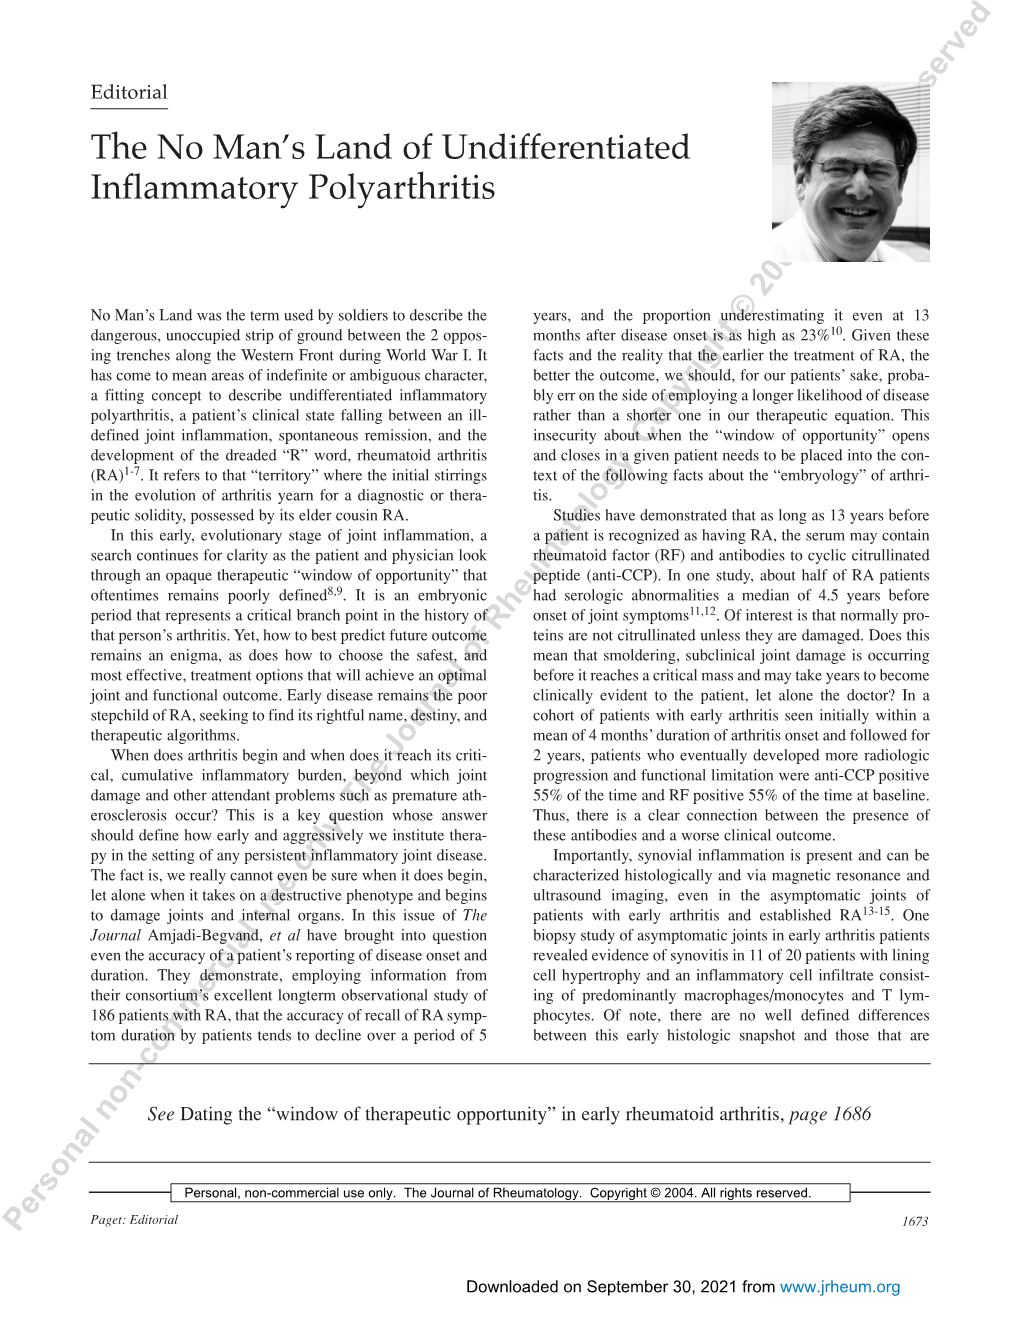 The No Man's Land of Undifferentiated Inflammatory Polyarthritis